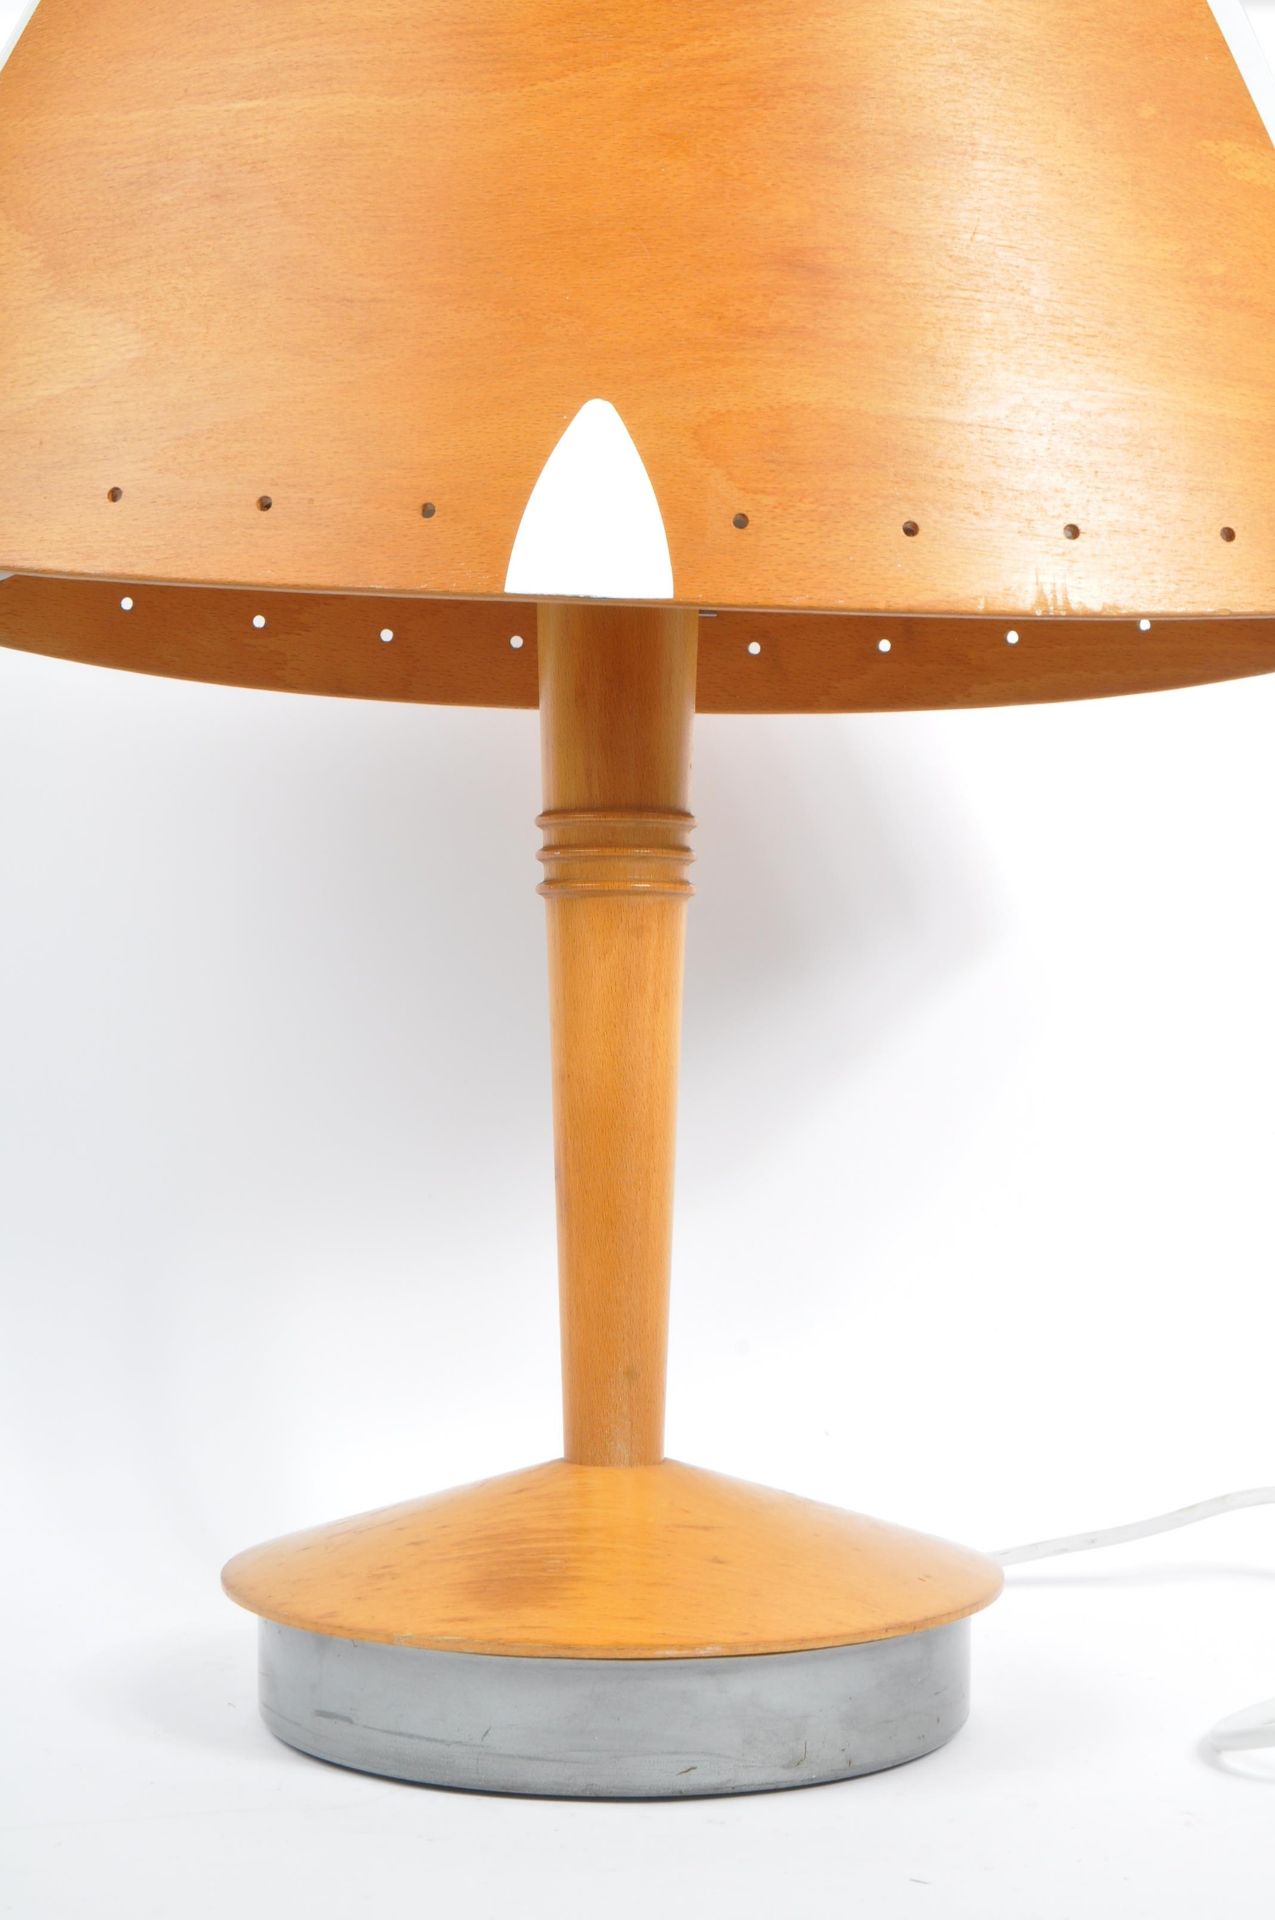 RETRO 20TH CENTURY TABLE LAMP BY SOREN ERIKSEN FOR LUCID - Image 6 of 6